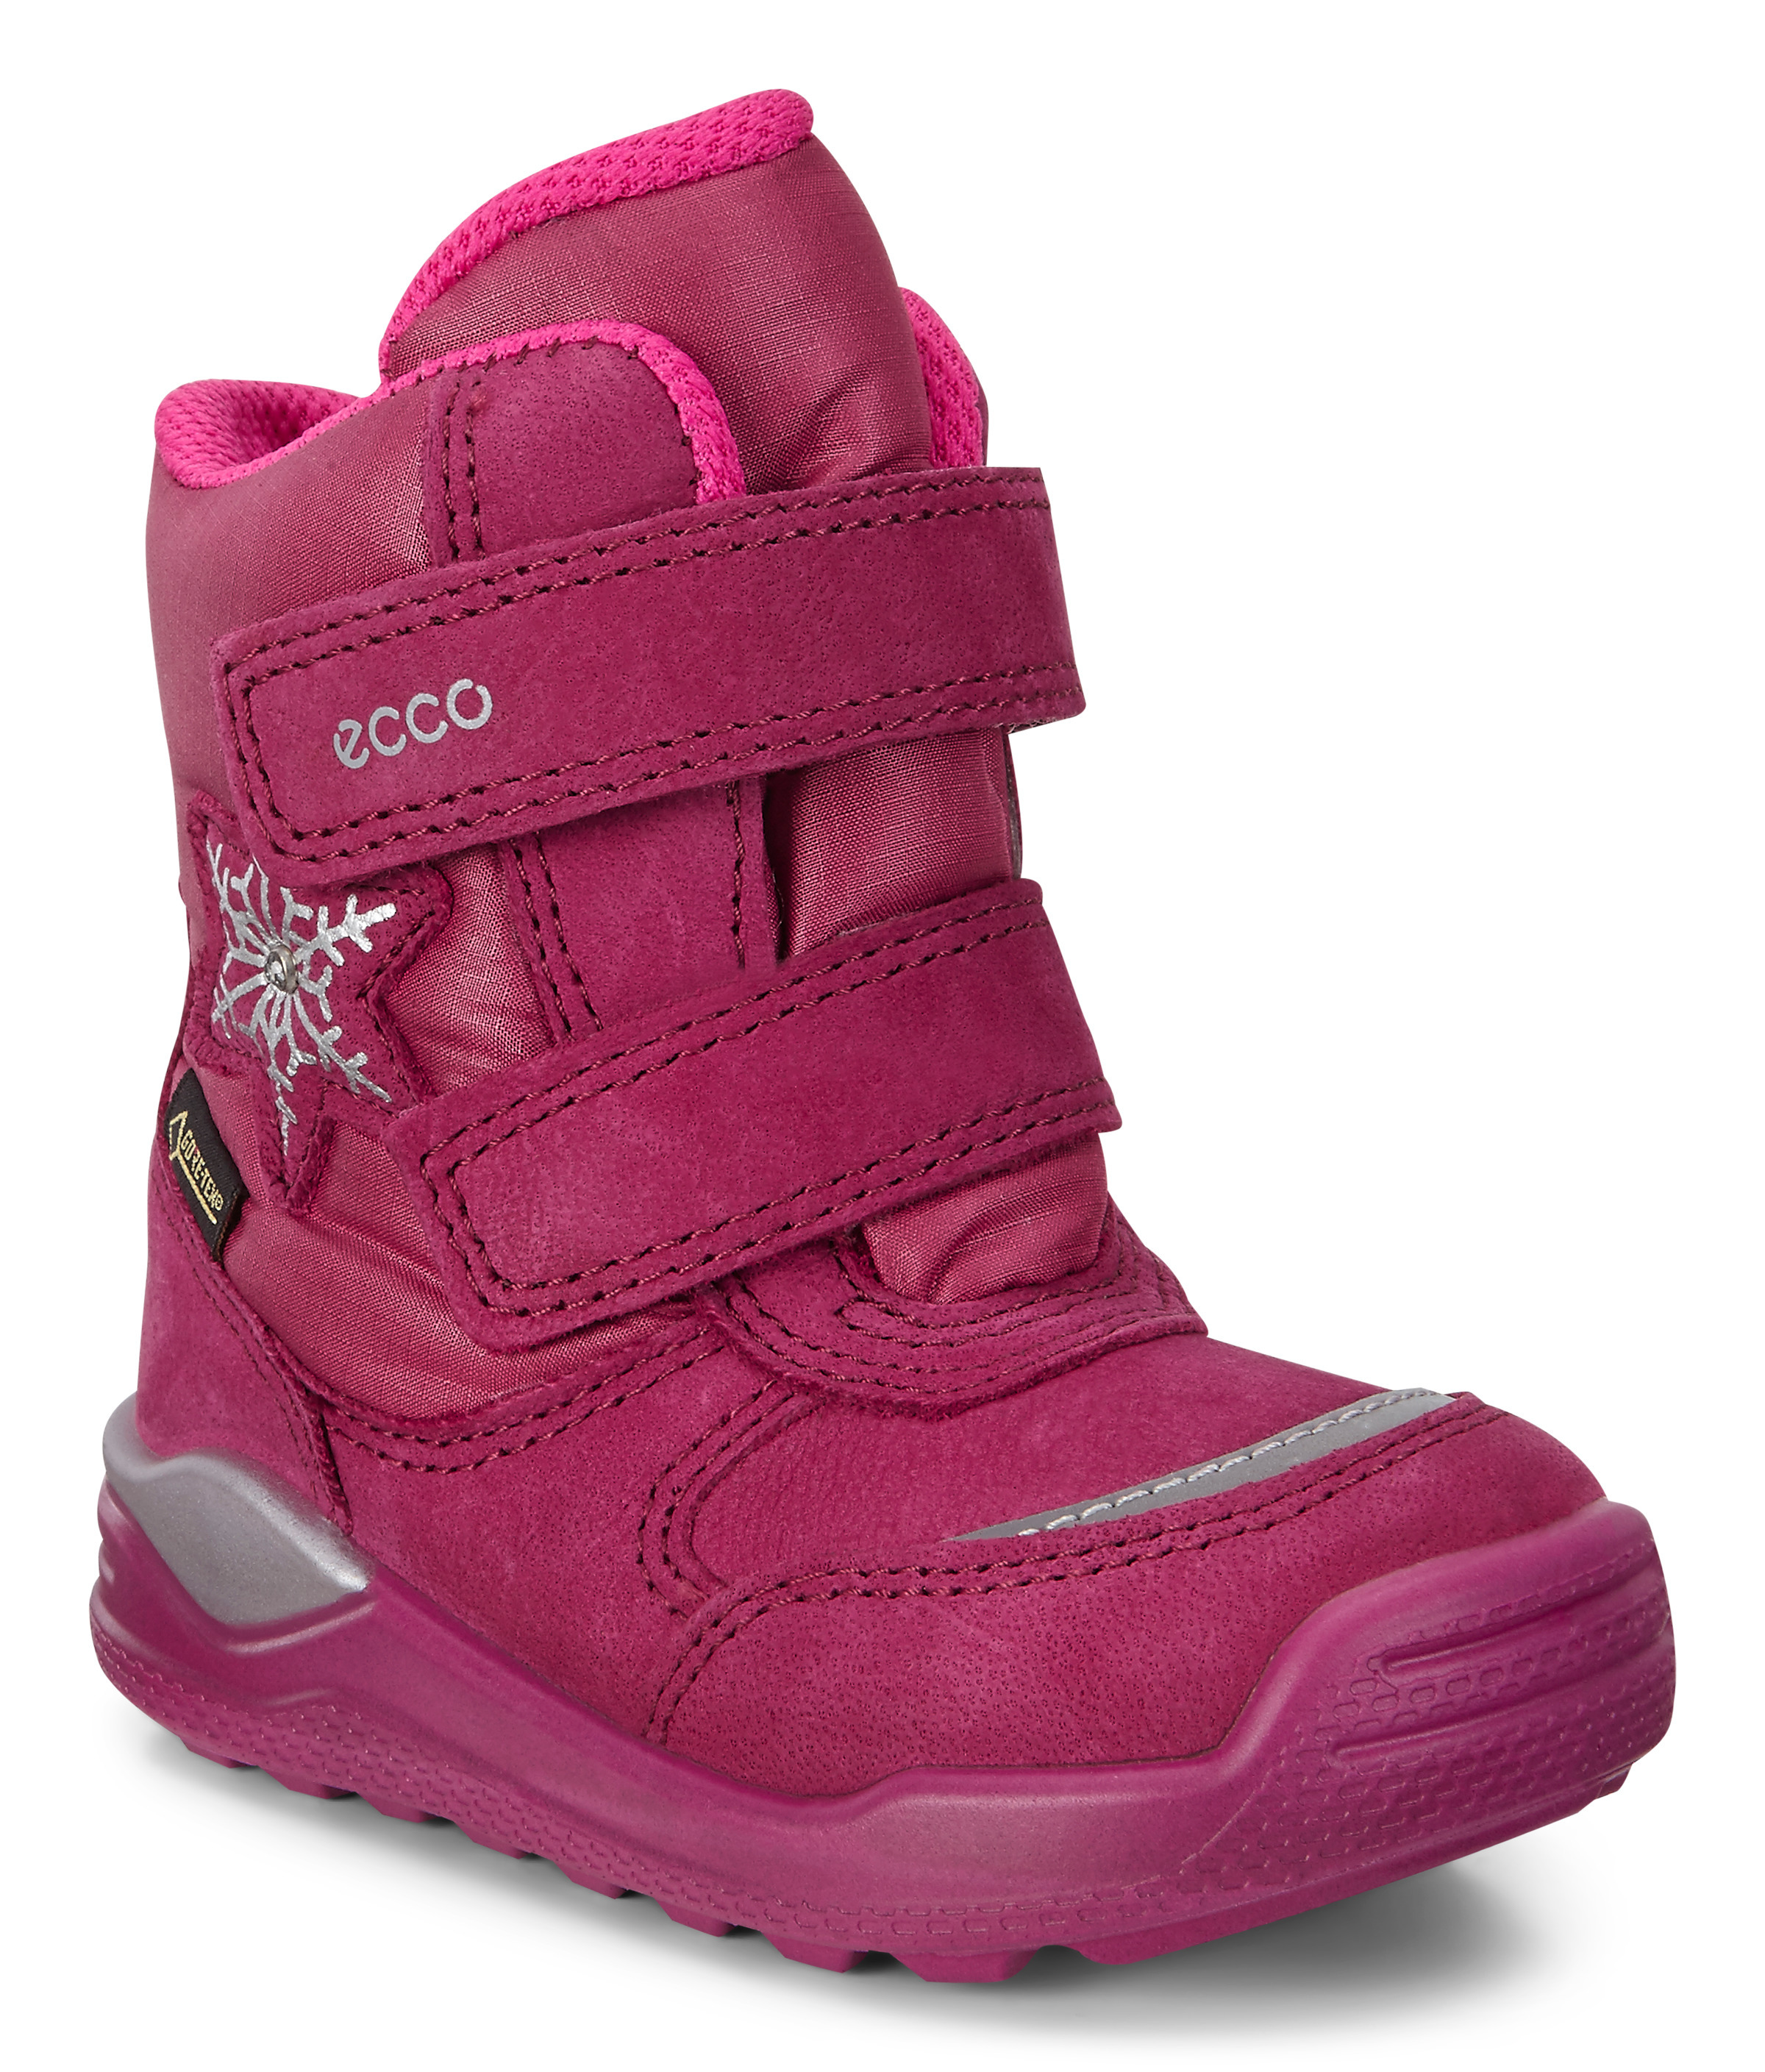 ecco winter boots girls